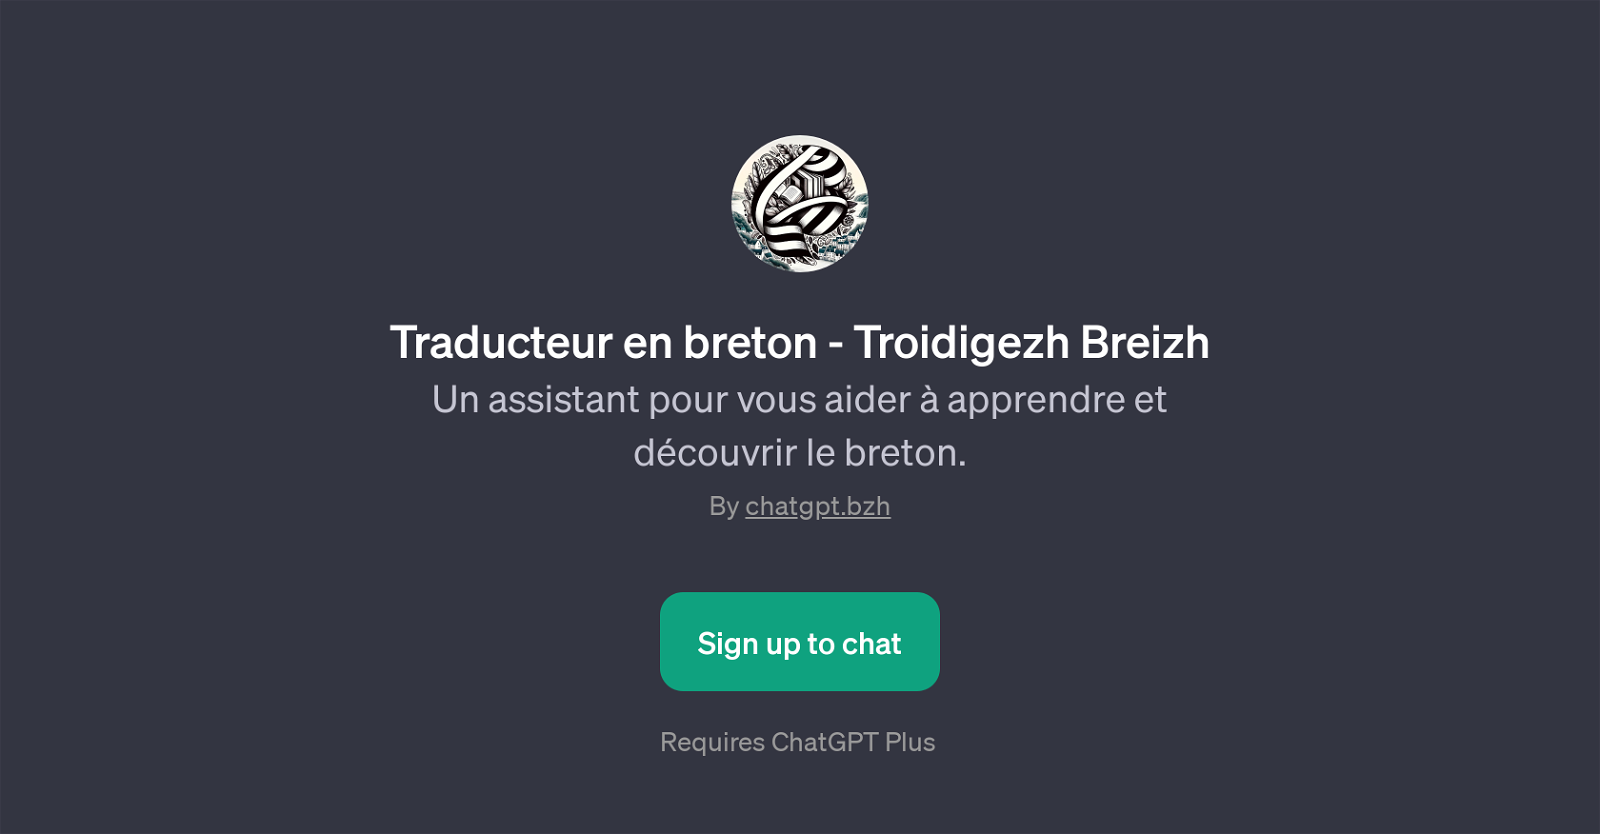 Traducteur en breton - Troidigezh Breizh website